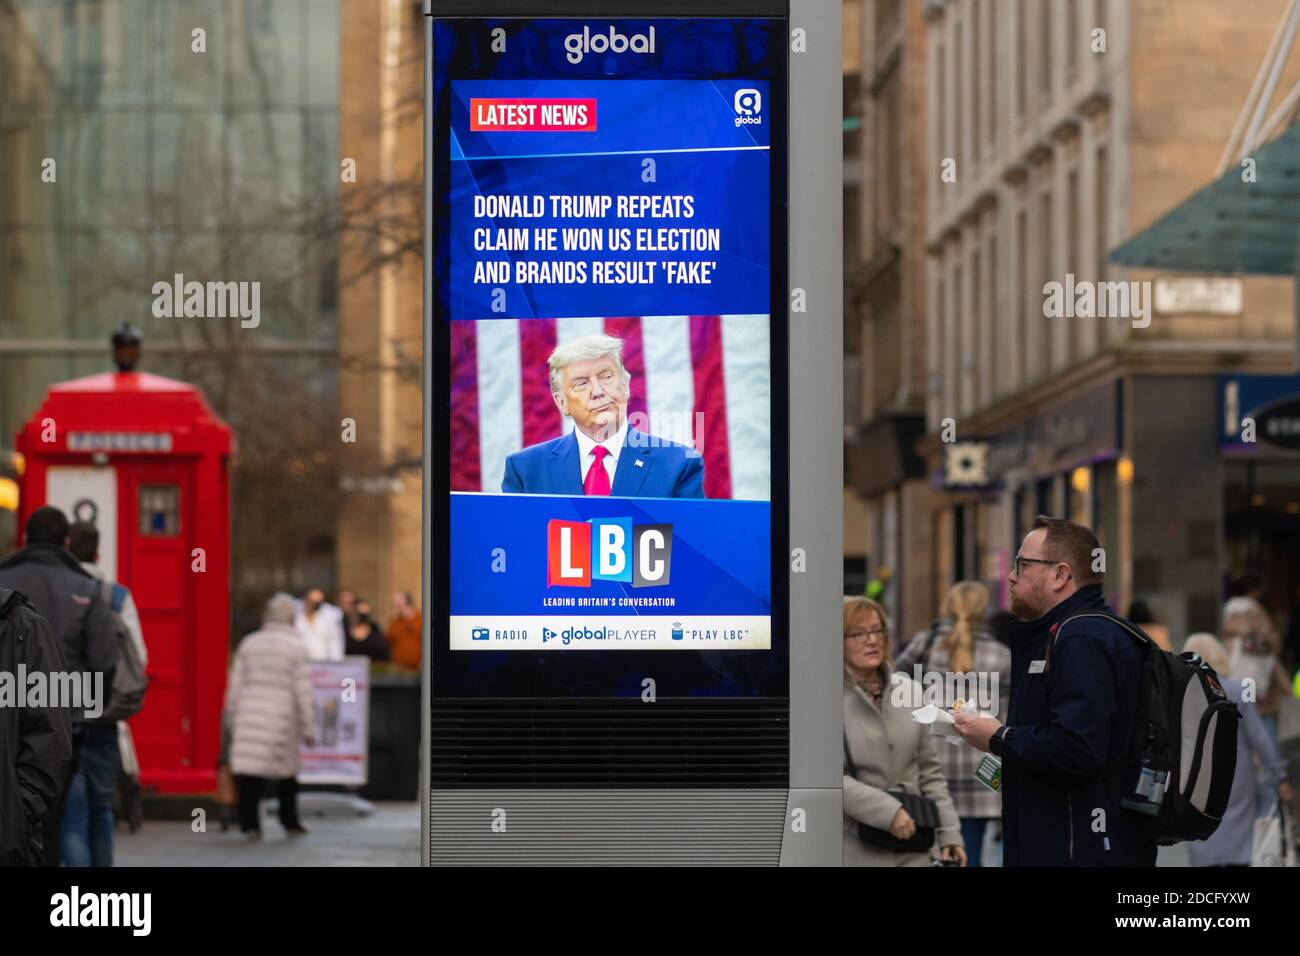 Donald Trump repeats claim he won us election and brands result fake - LBC headline on Streethub advertising digital screen - Glasgow, Scotland, UK Stock Photo